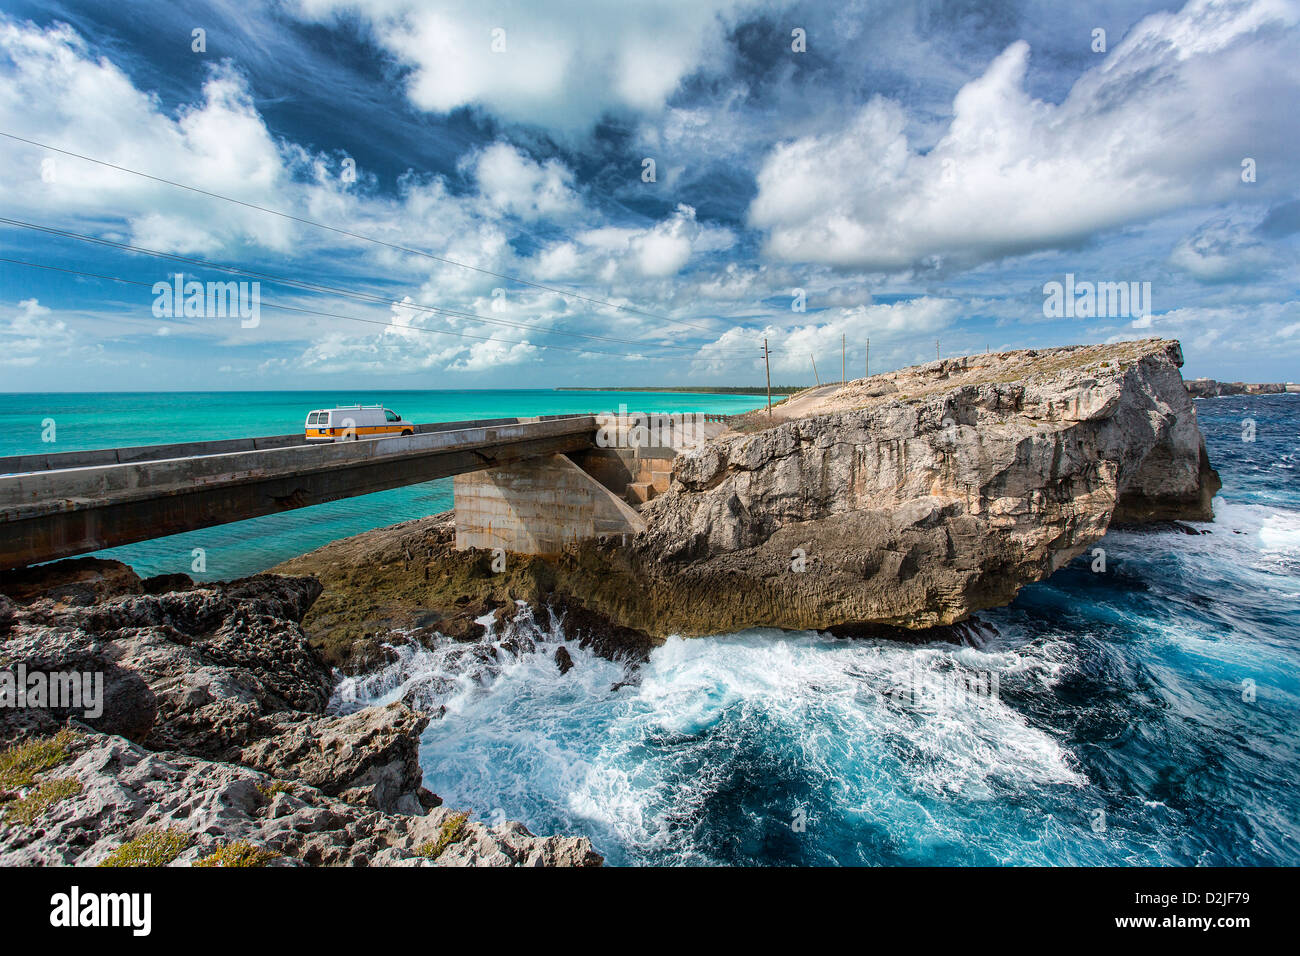 Bahamas, Eleuthera Island ,la finestra di vetro Bridge Foto Stock